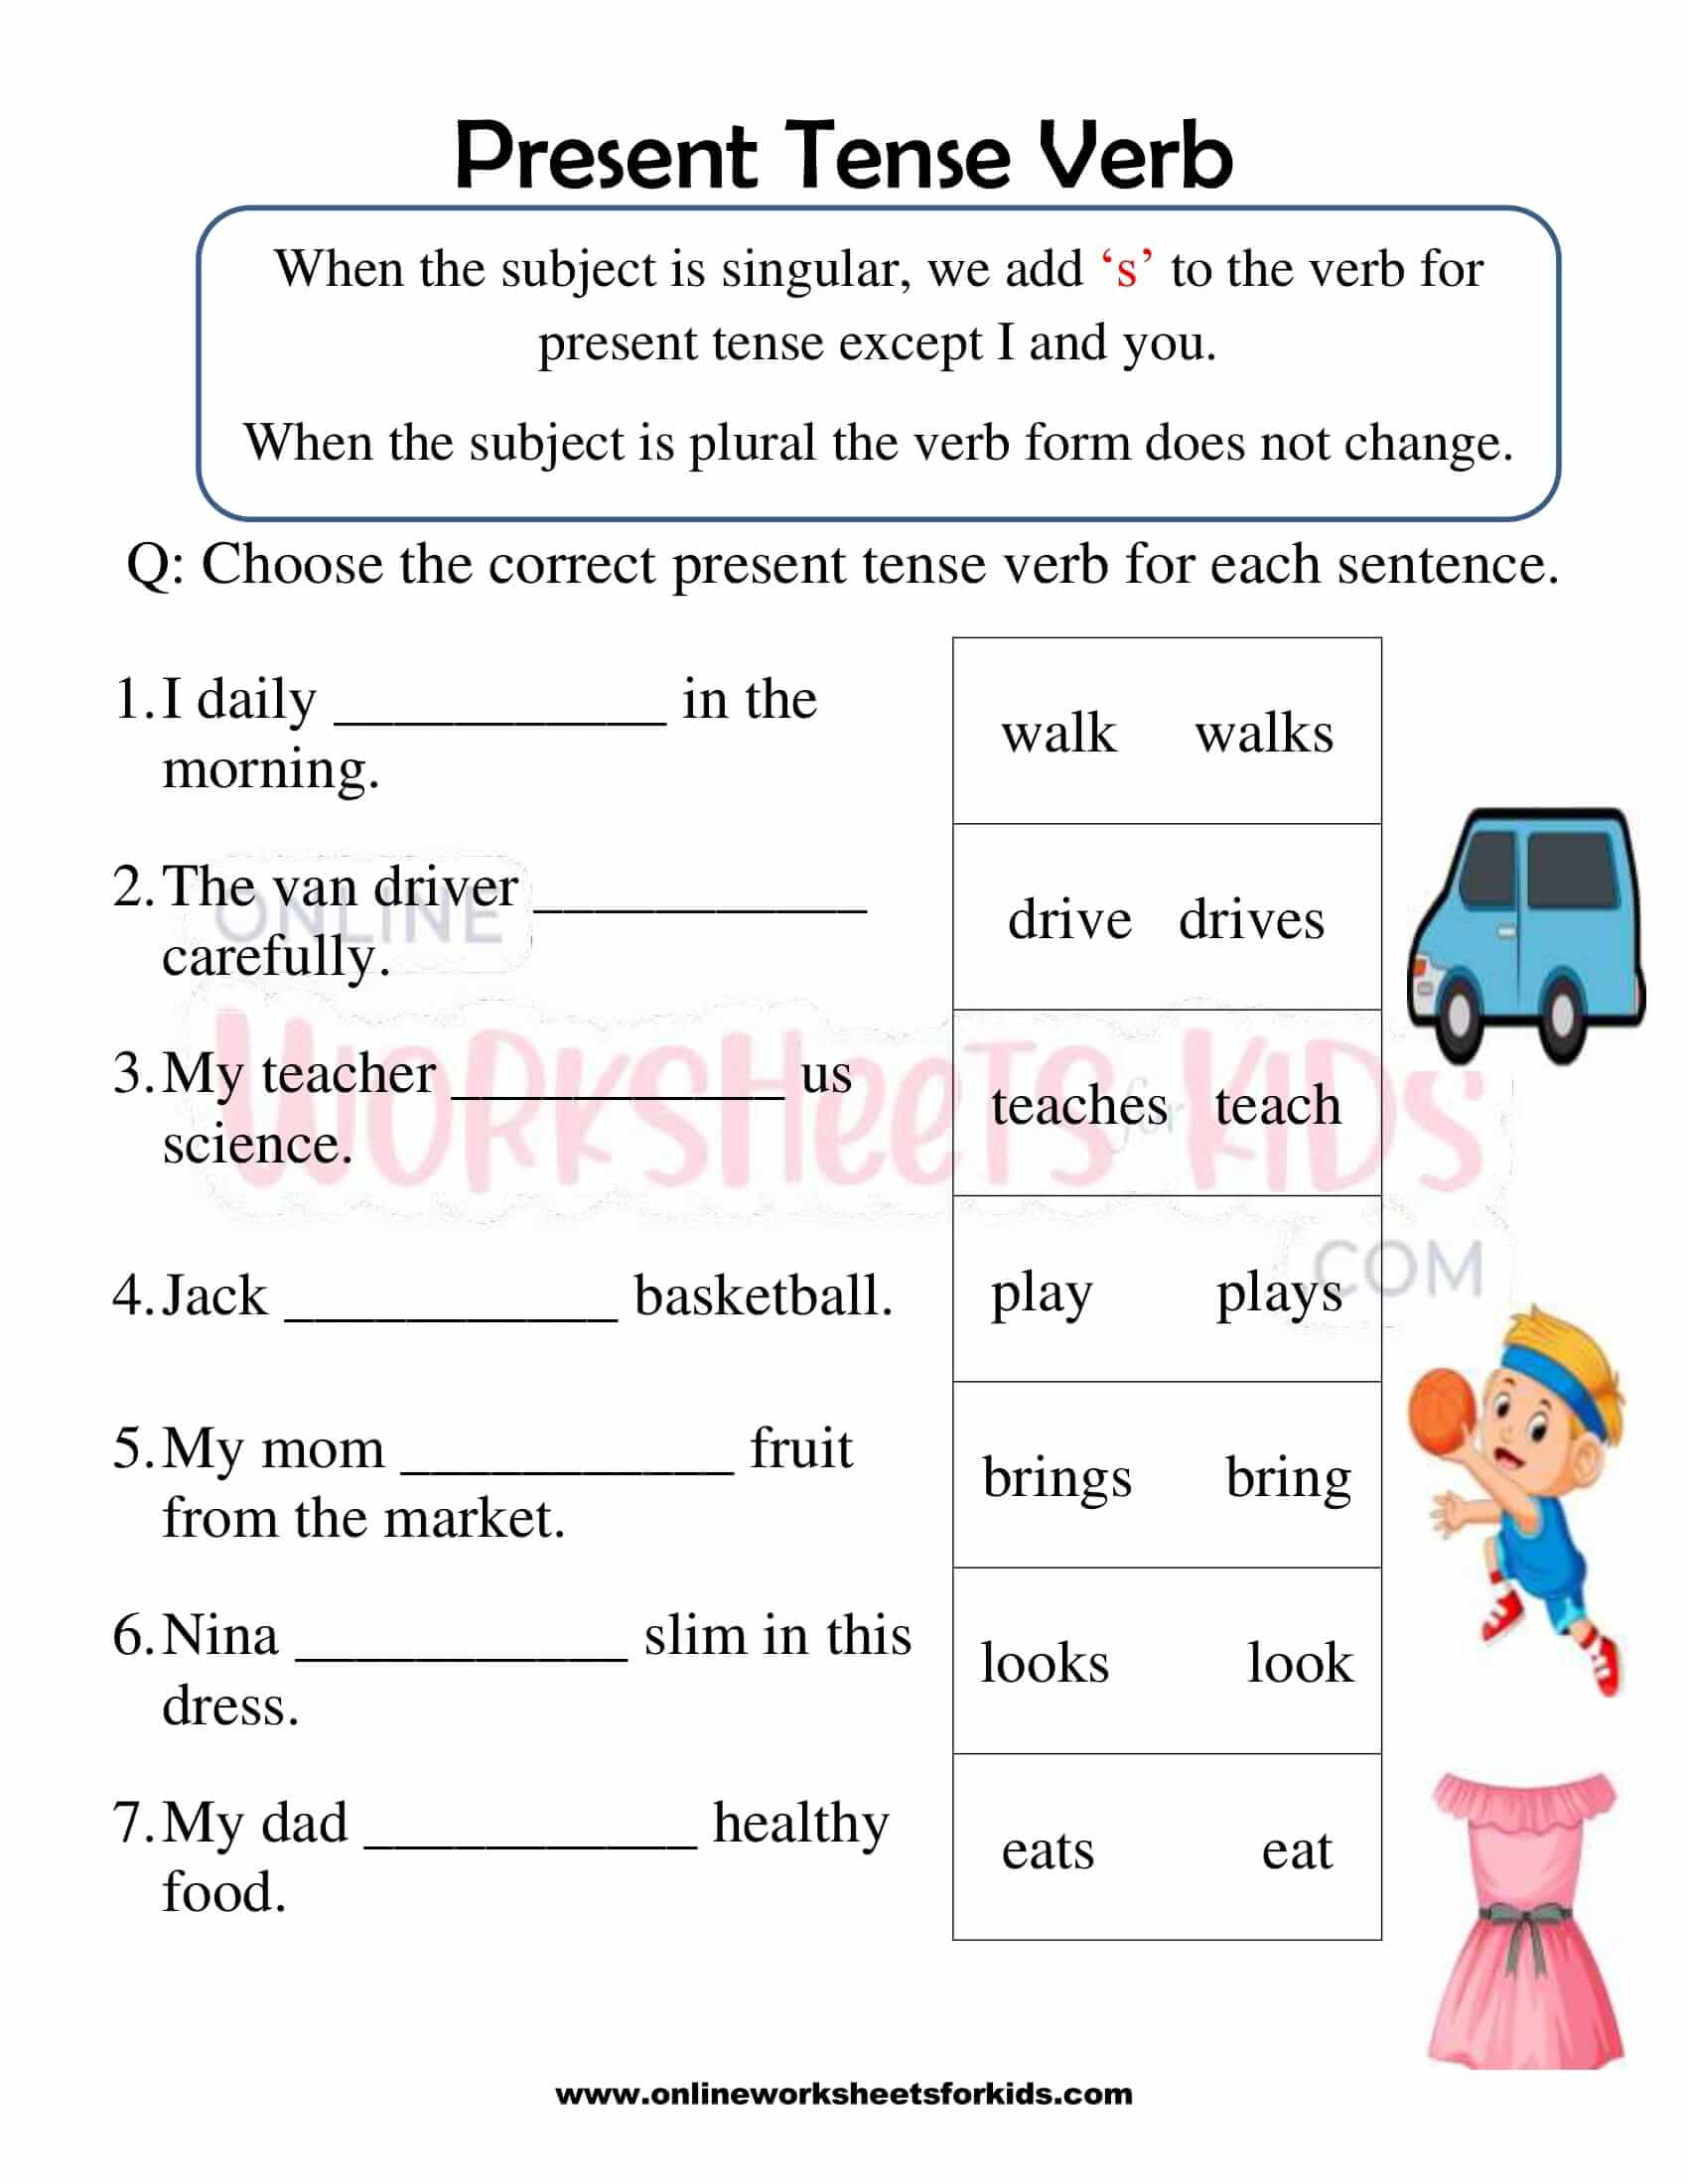 present-tense-verb-worksheet-1st-grade-8